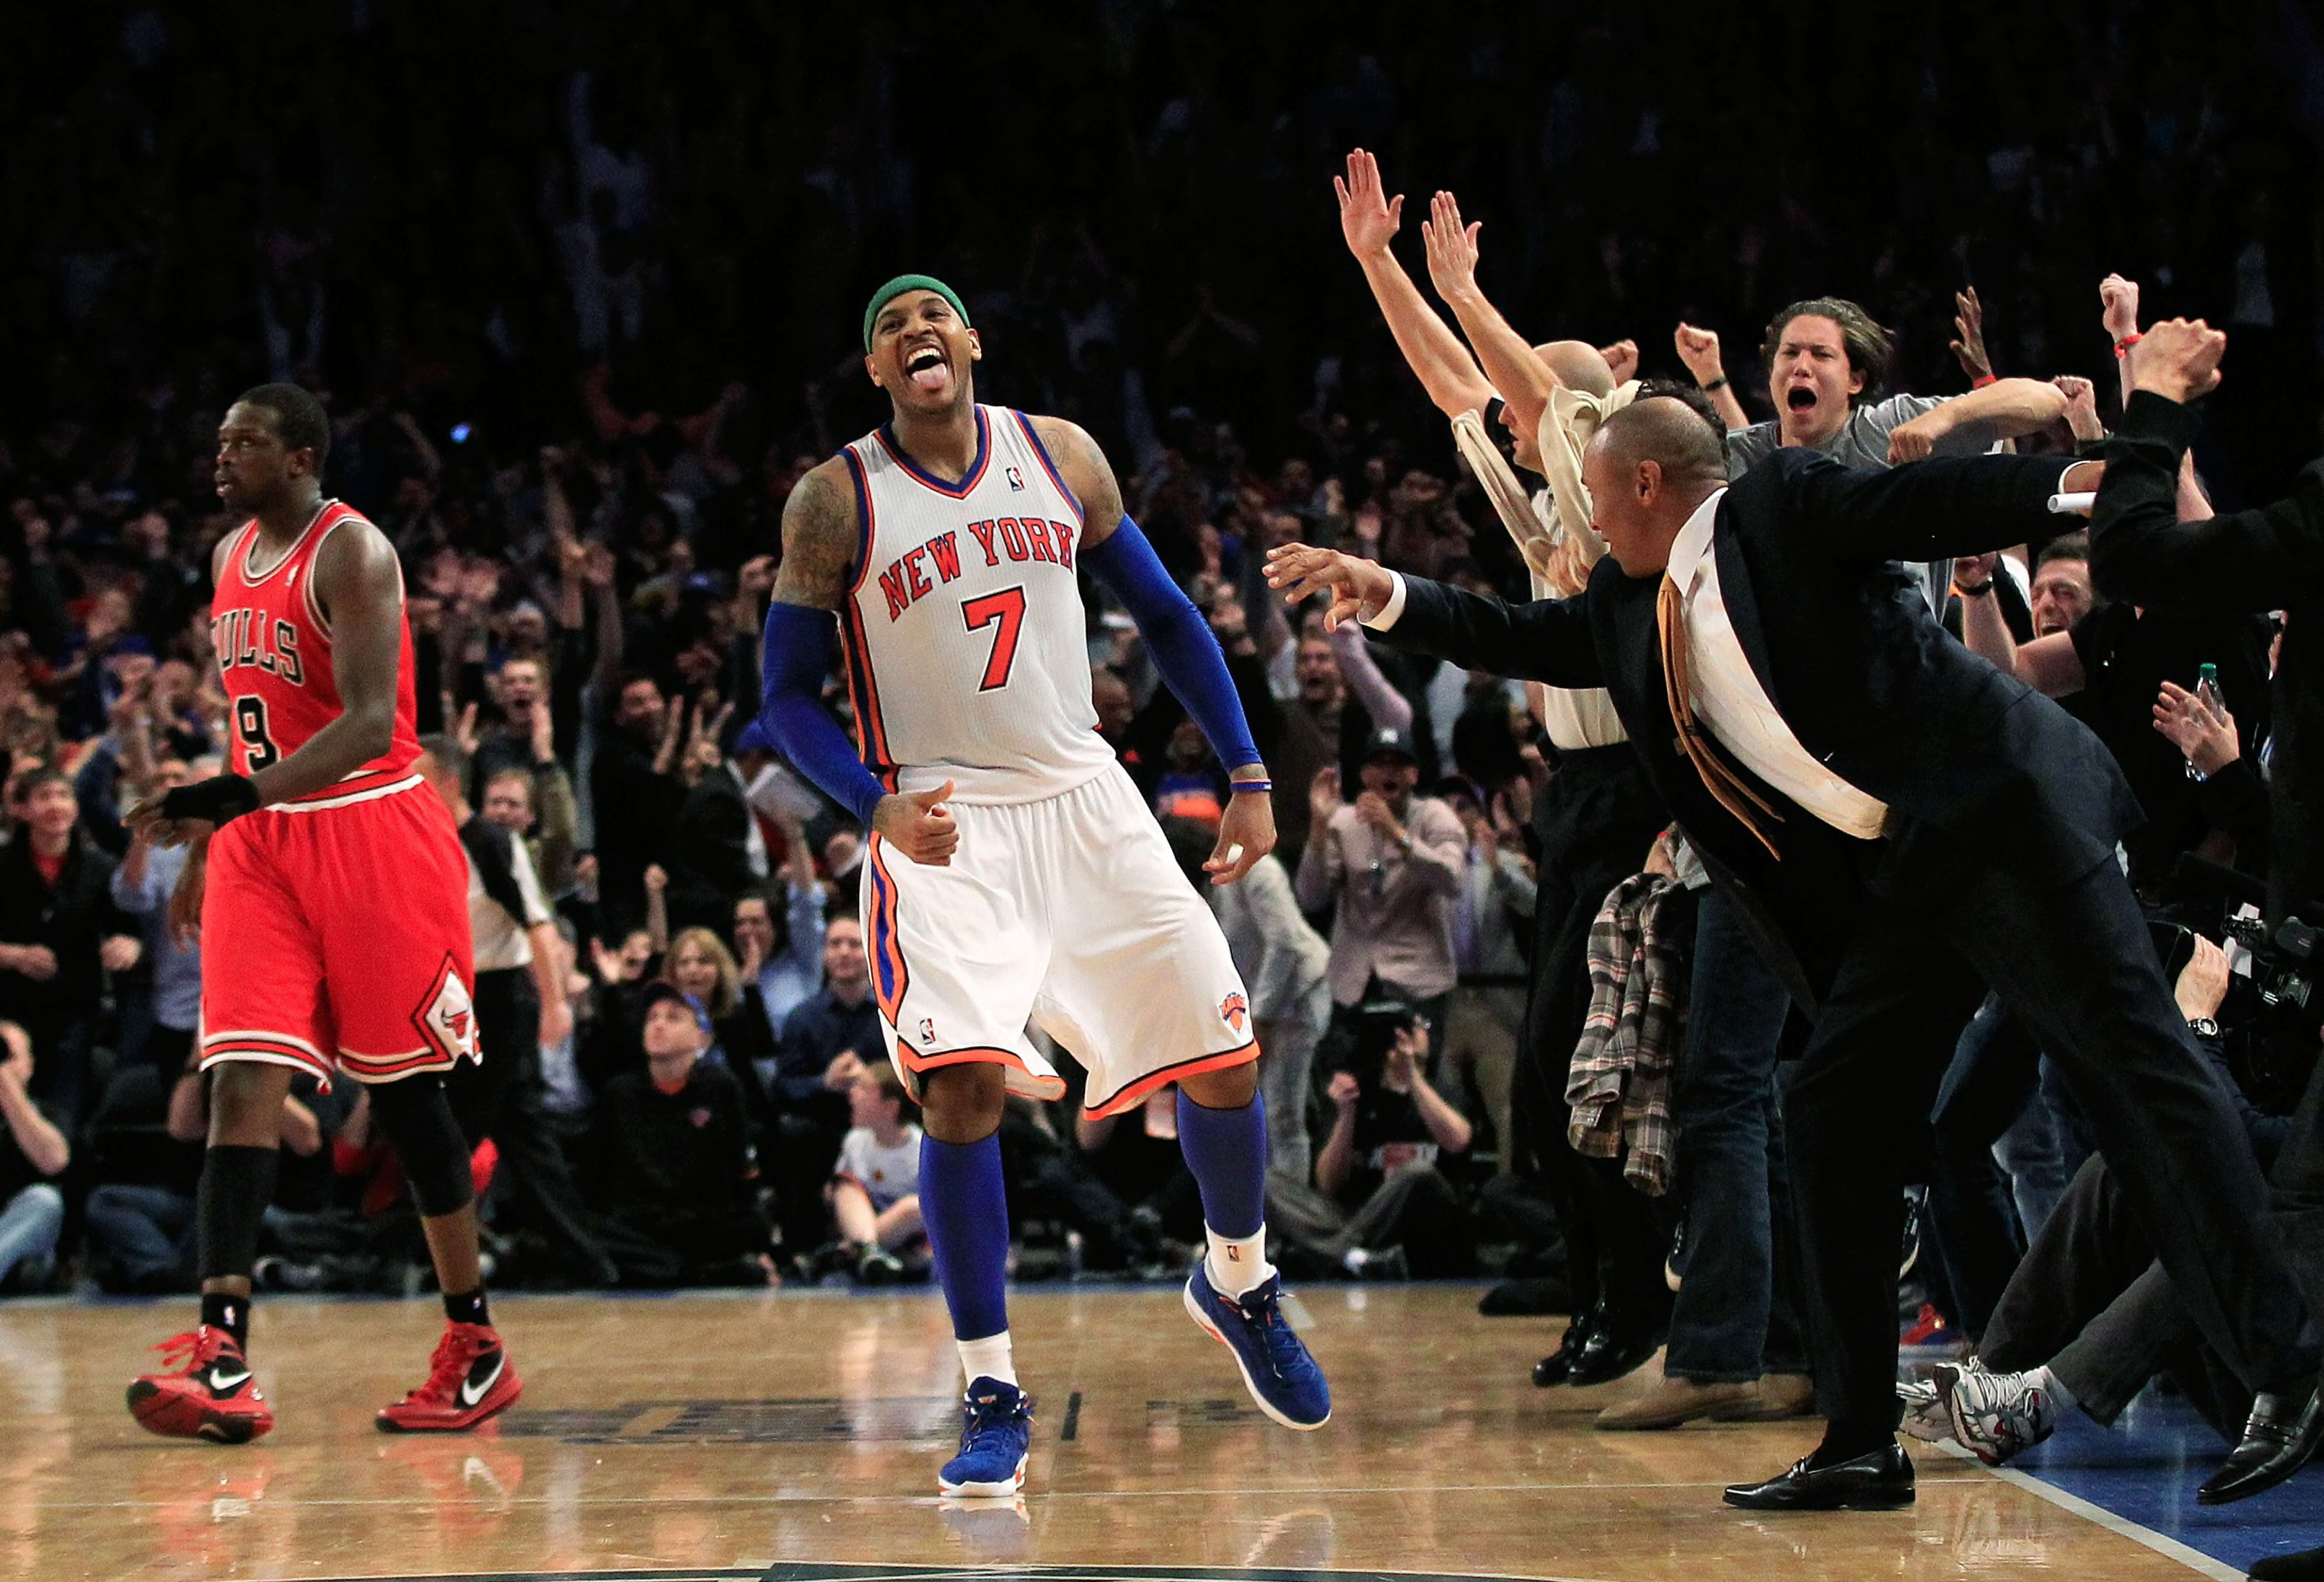 Carmelo Anthony, New York Knicks